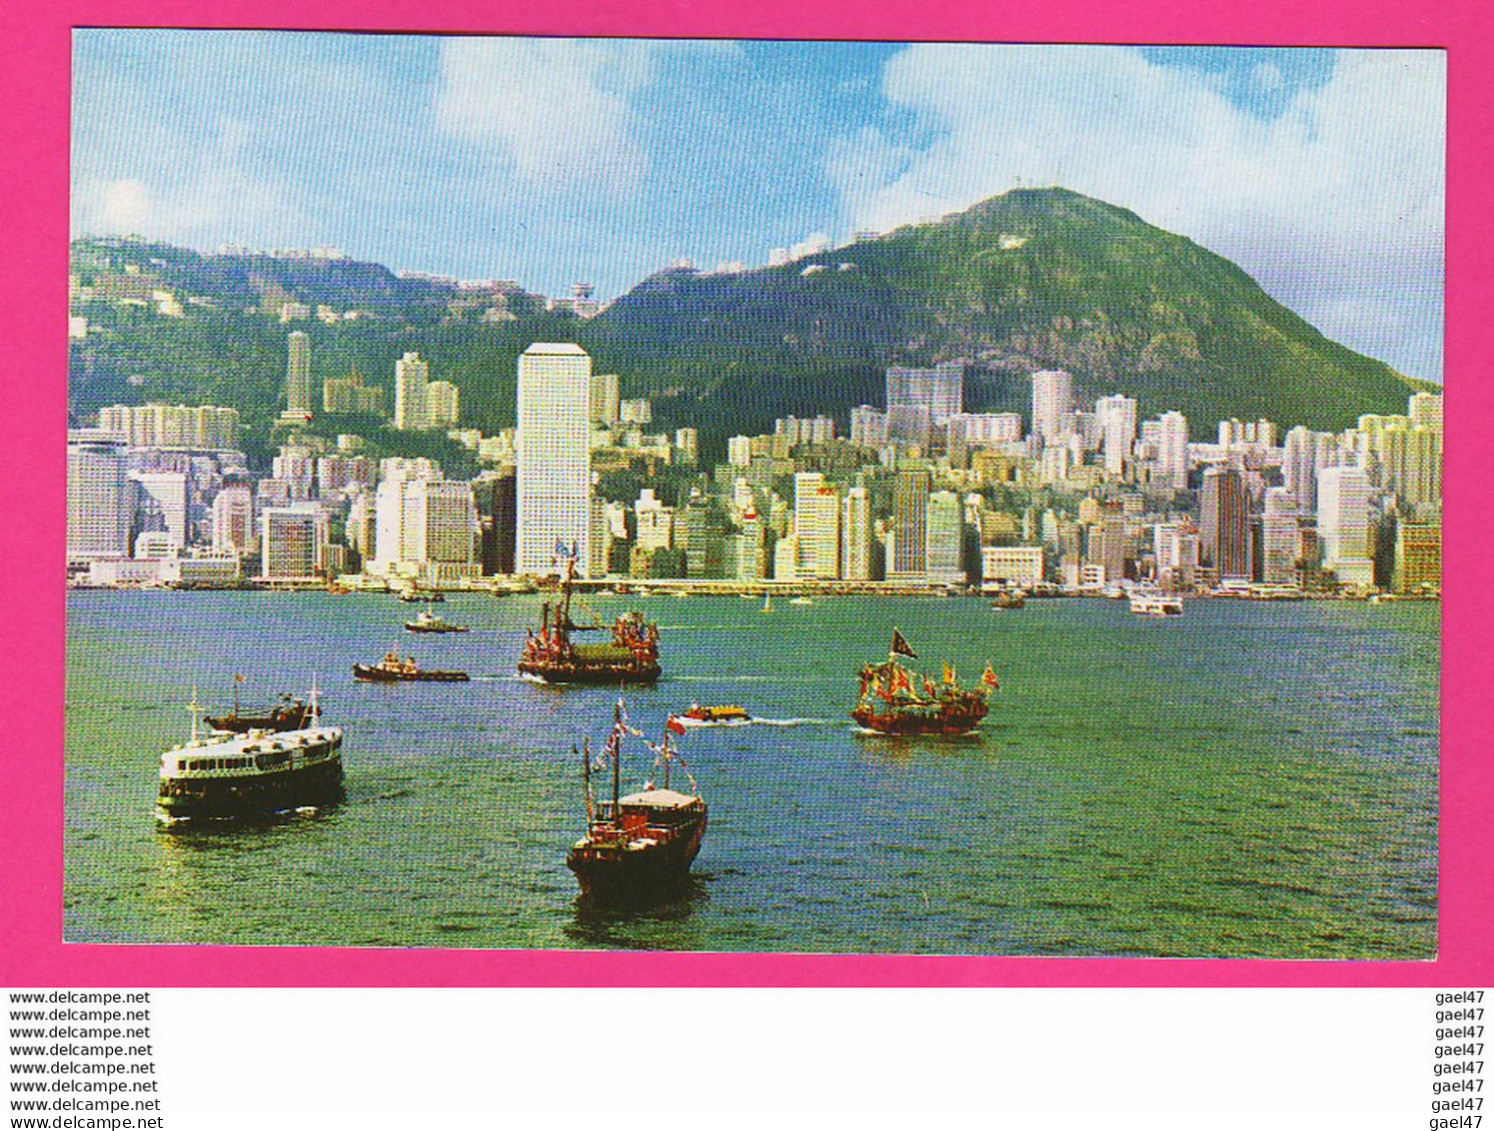 CP (Réf: Z 3684) (ASIE CHINE HONG KONG) CENTRAL DISTRICT - Chine (Hong Kong)